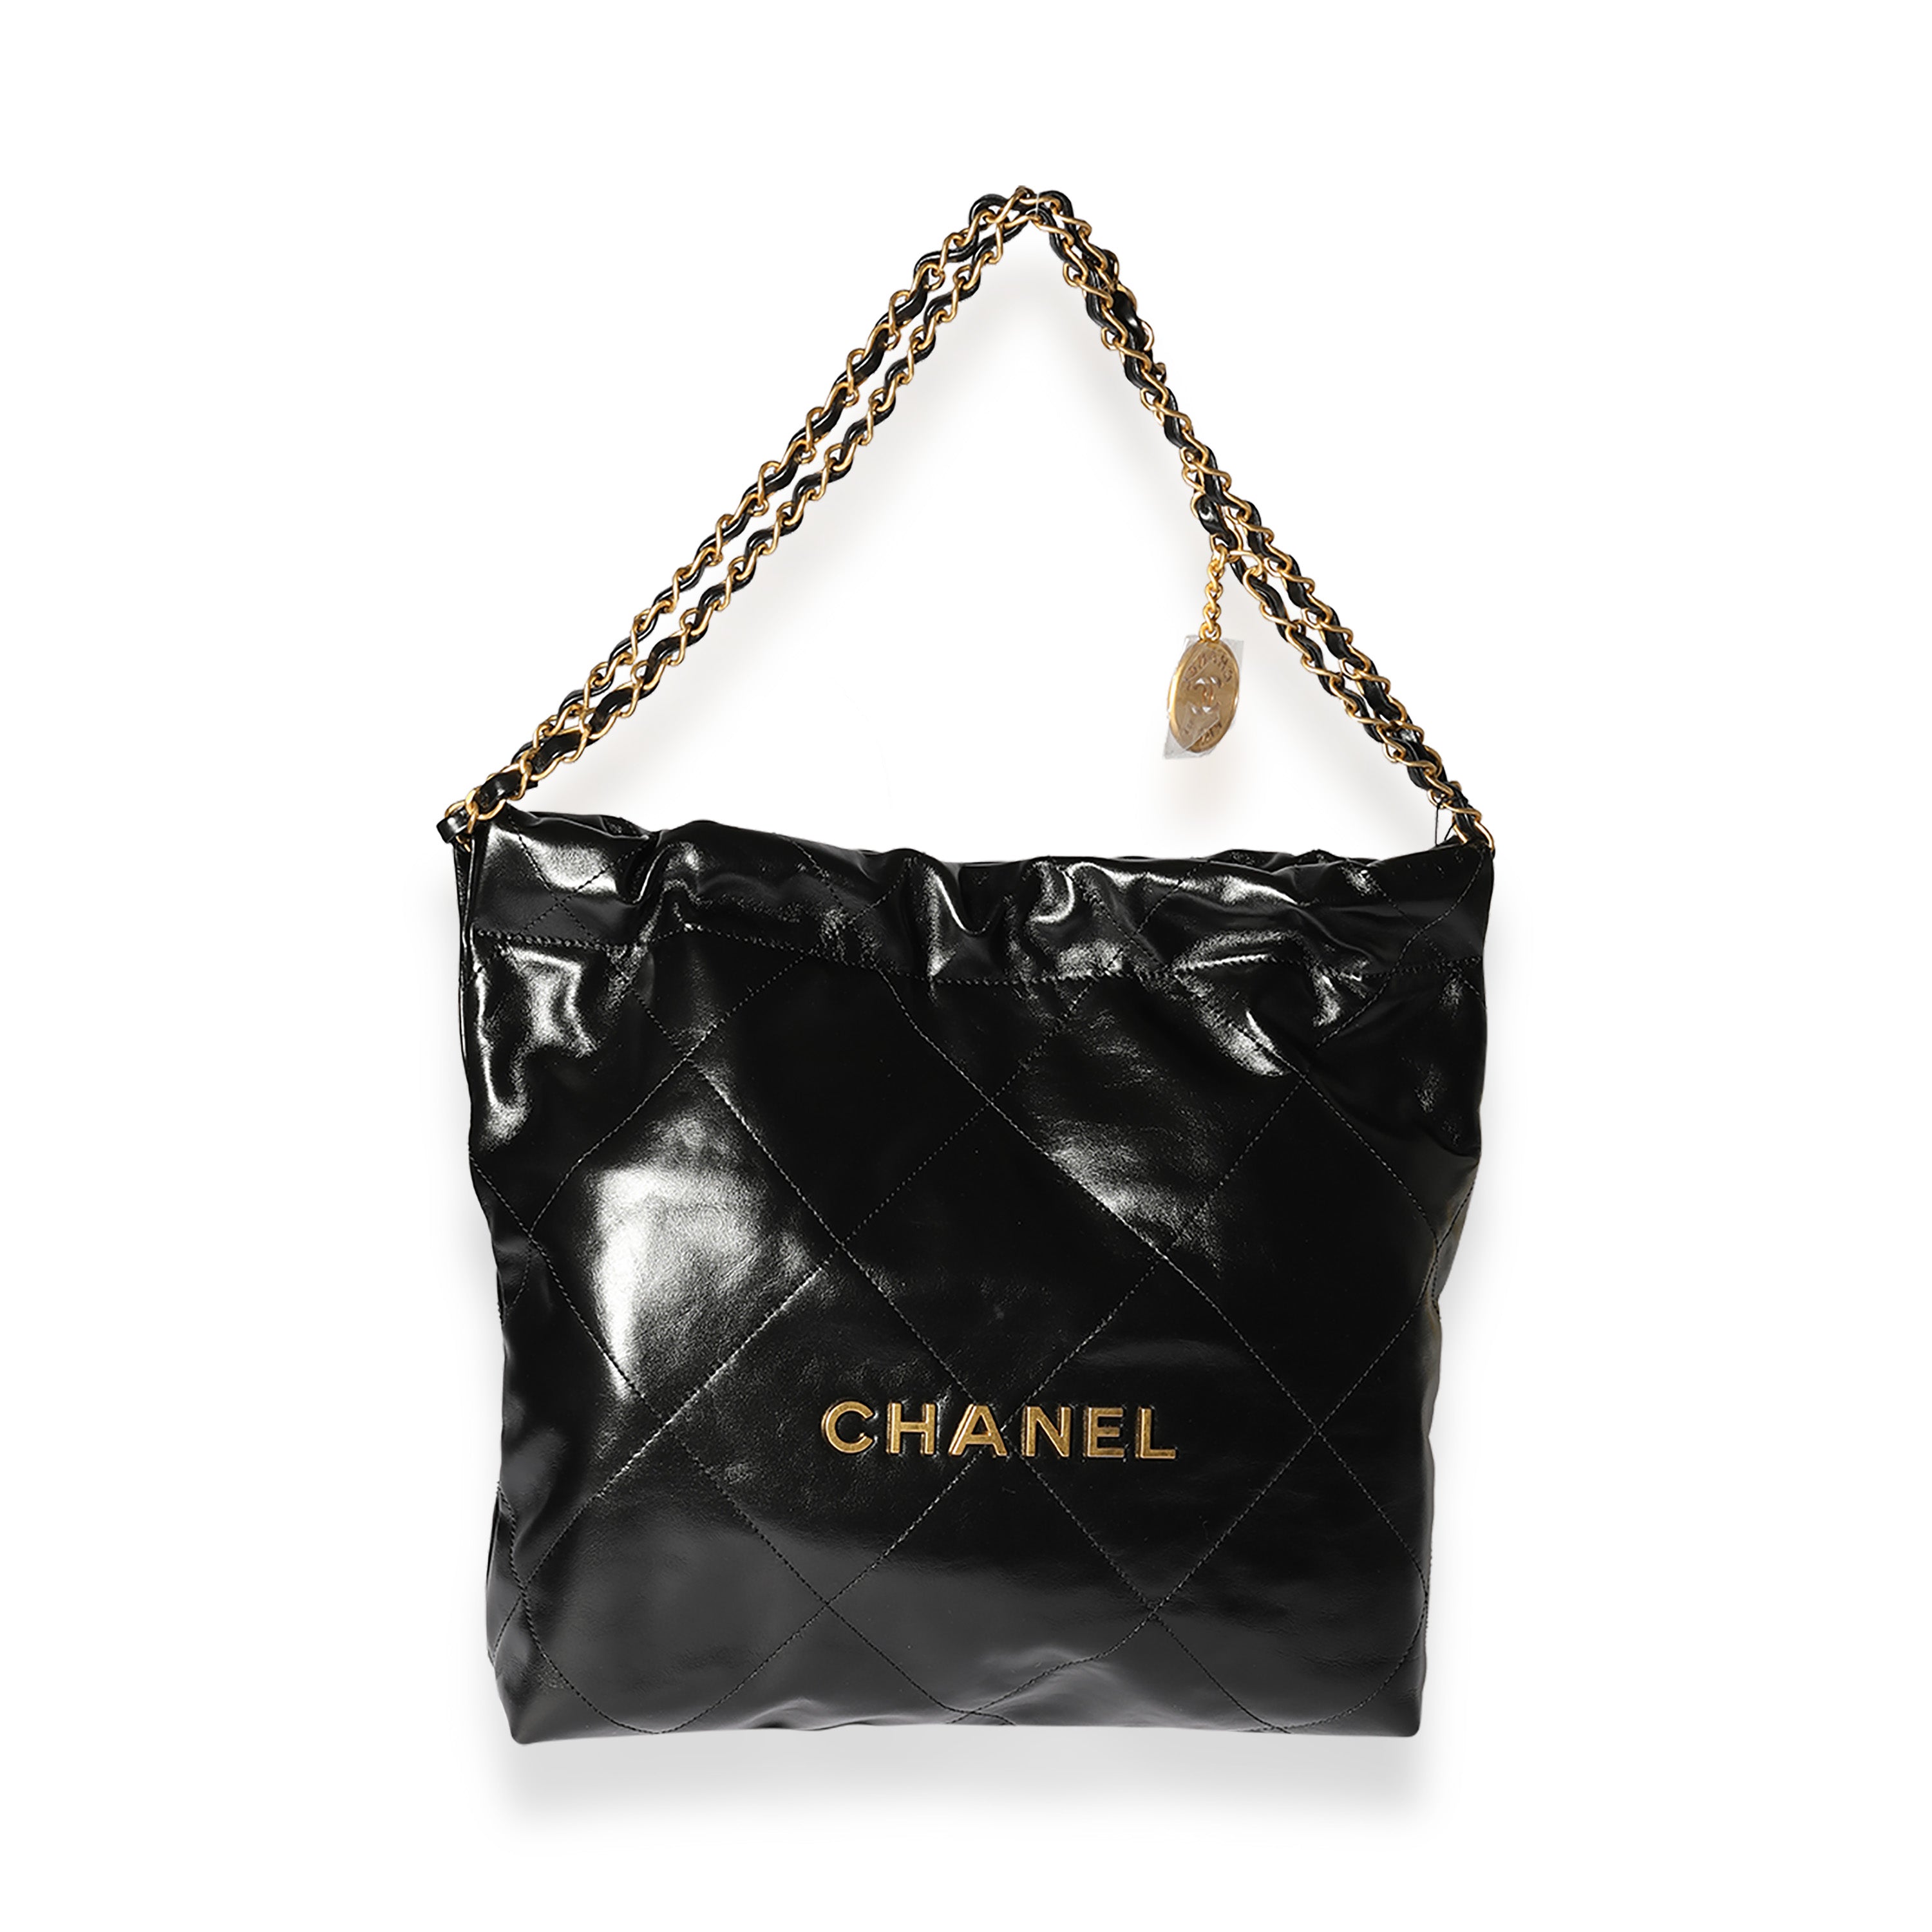 Chanel 22 leather handbag Chanel Black in Leather - 34374588